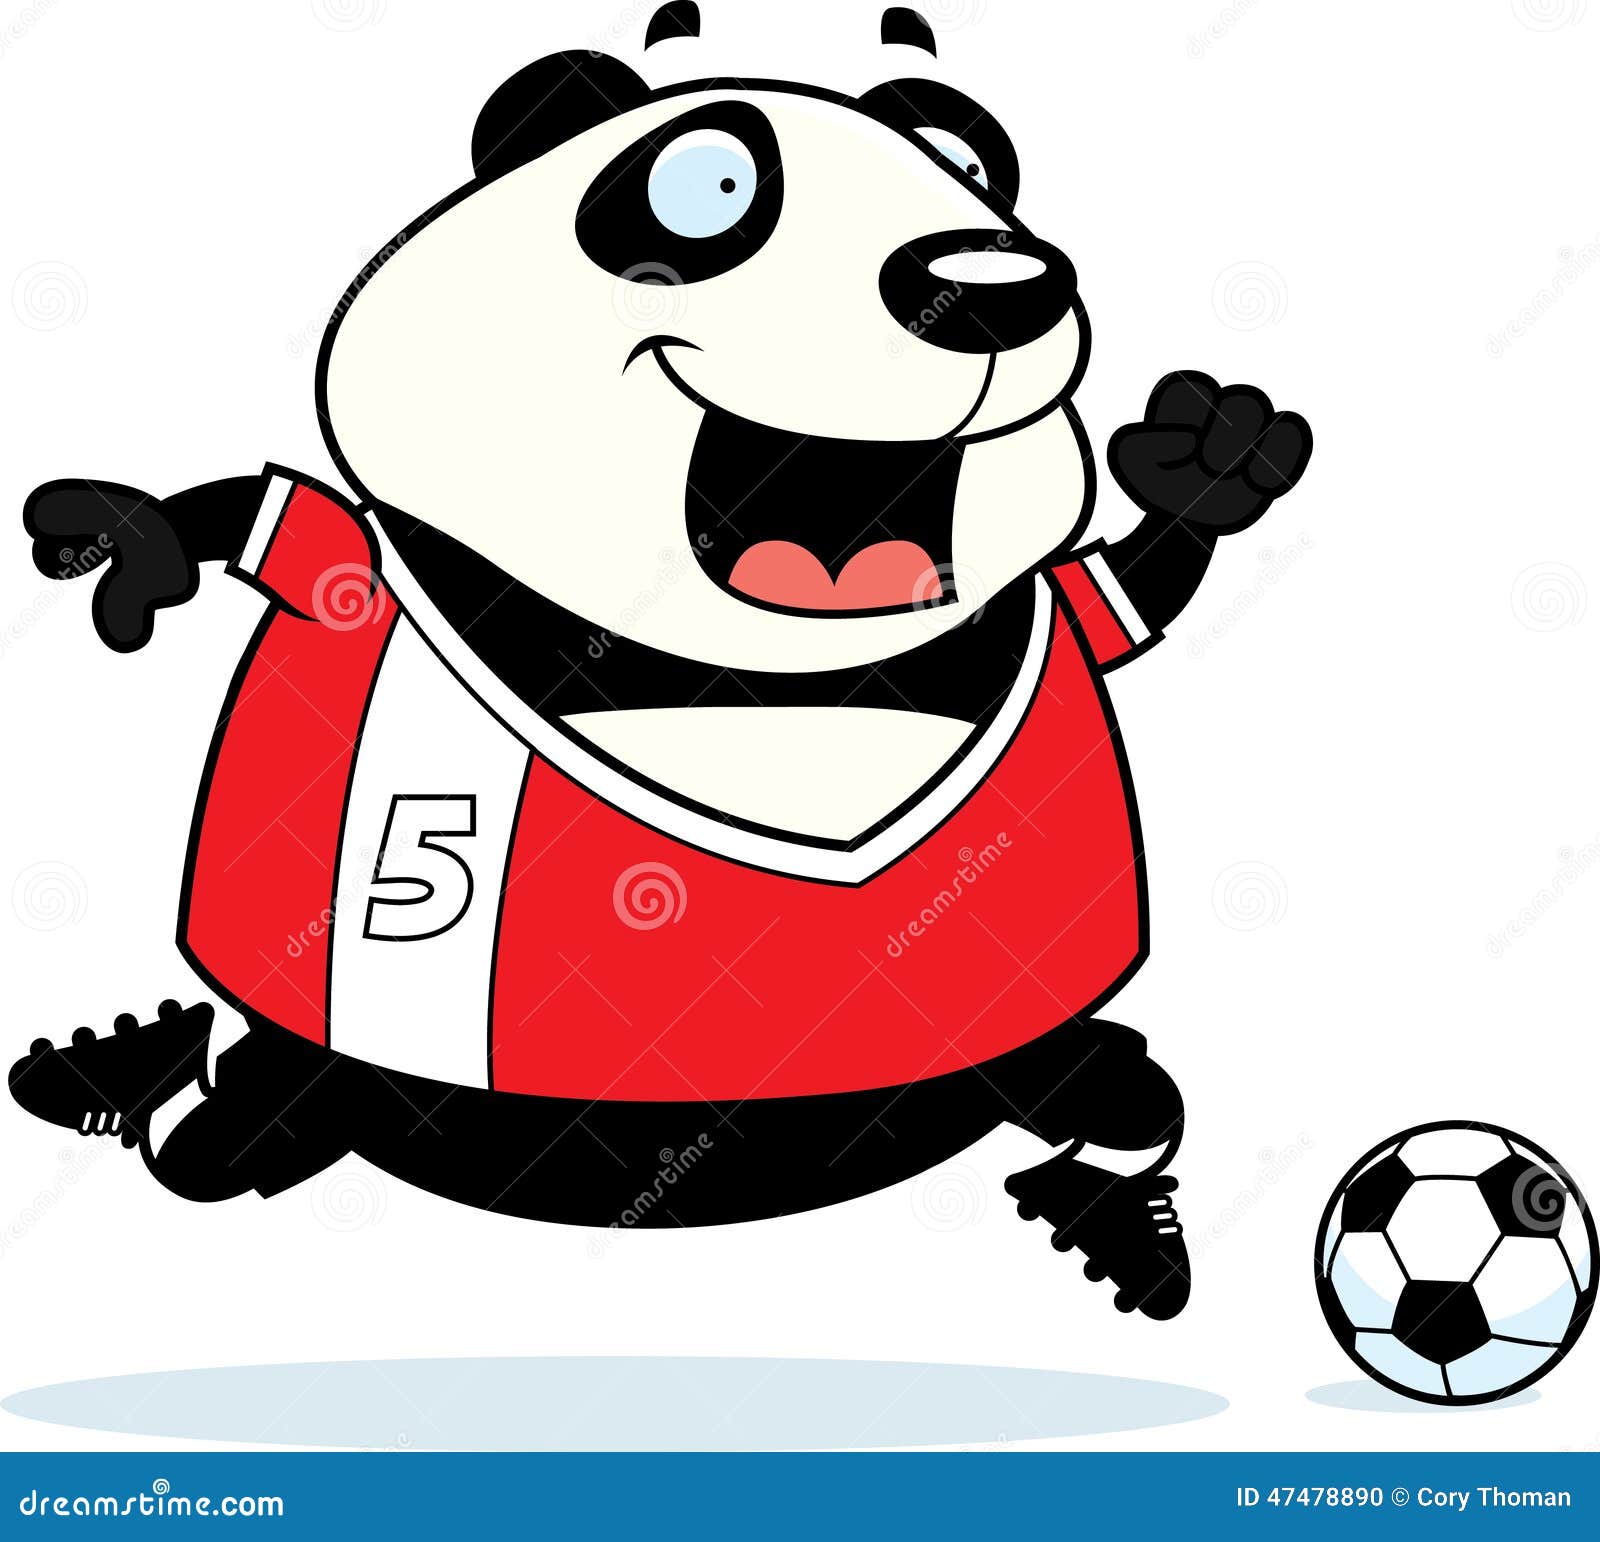 clipart panda soccer - photo #24